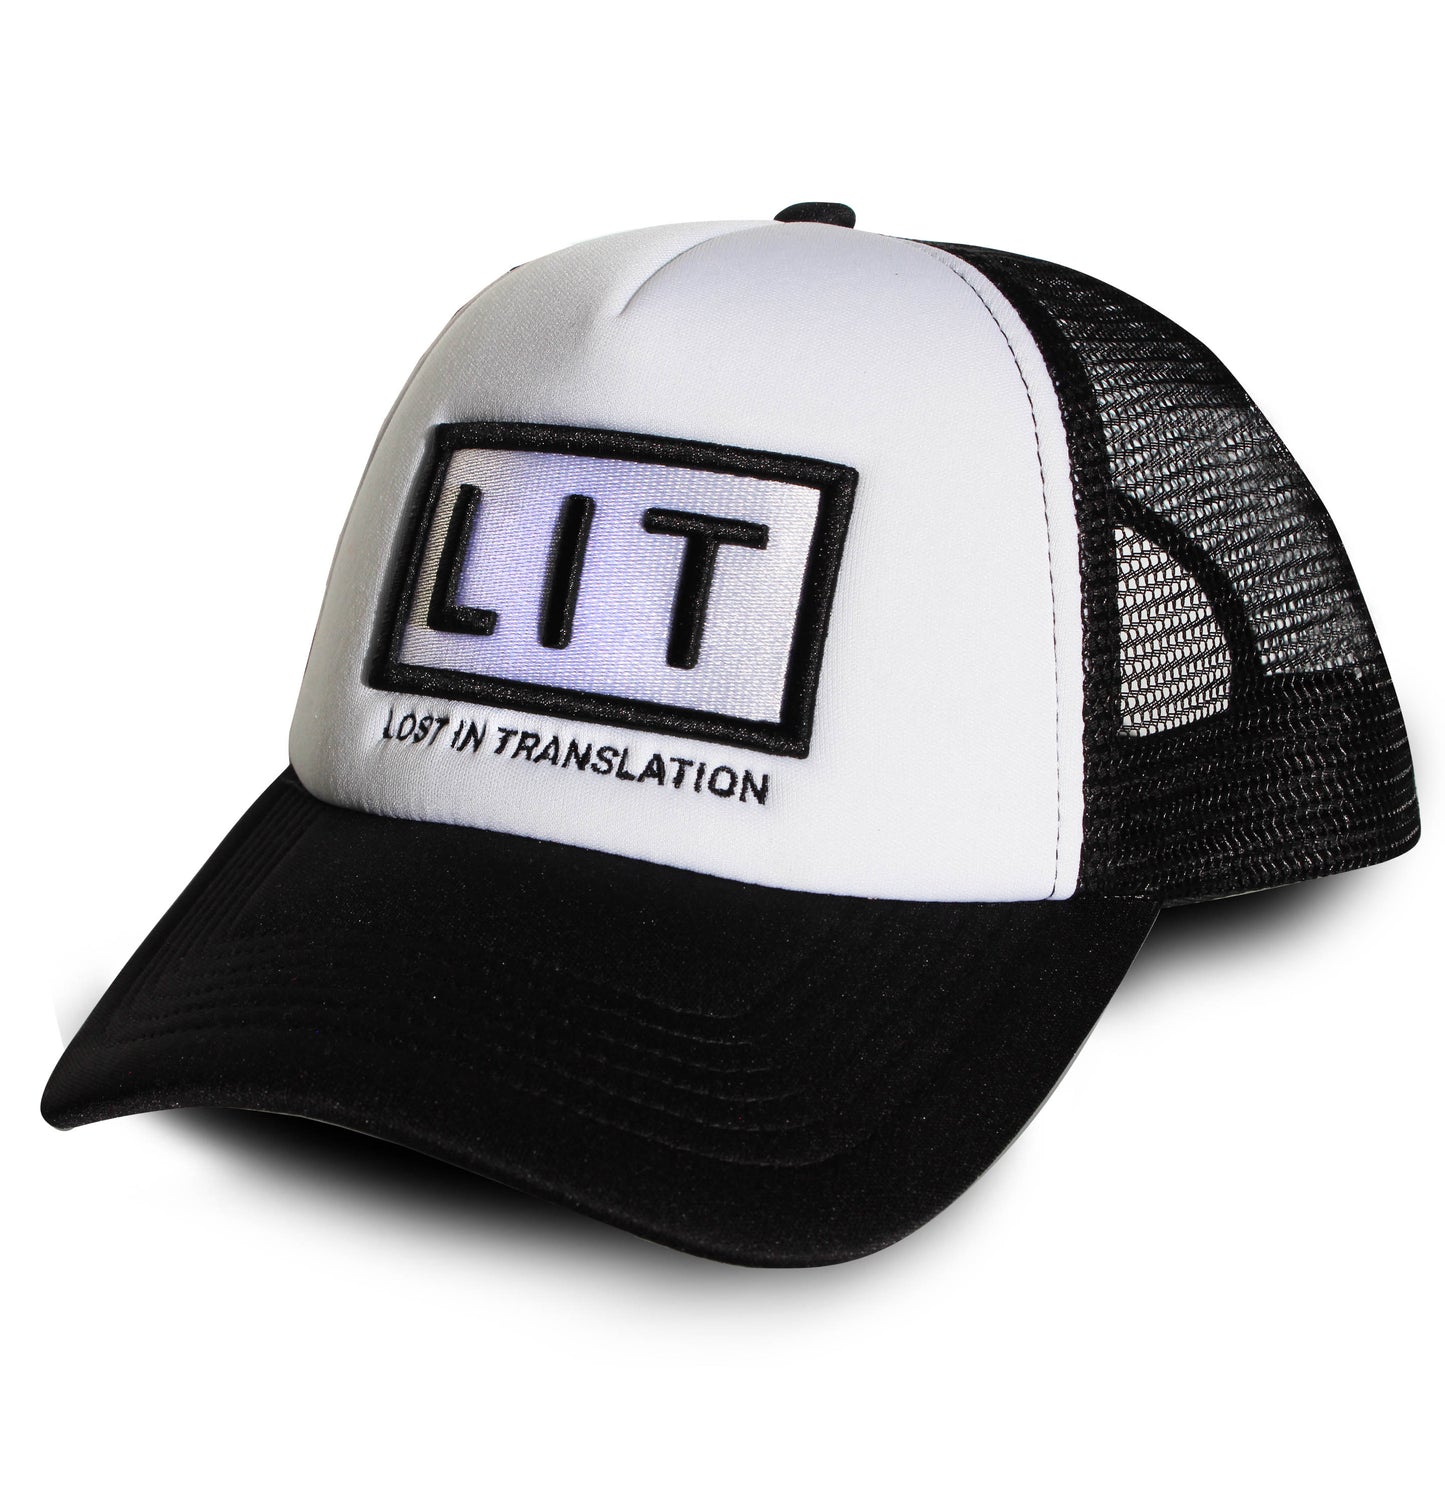 Black White Trucker Hat